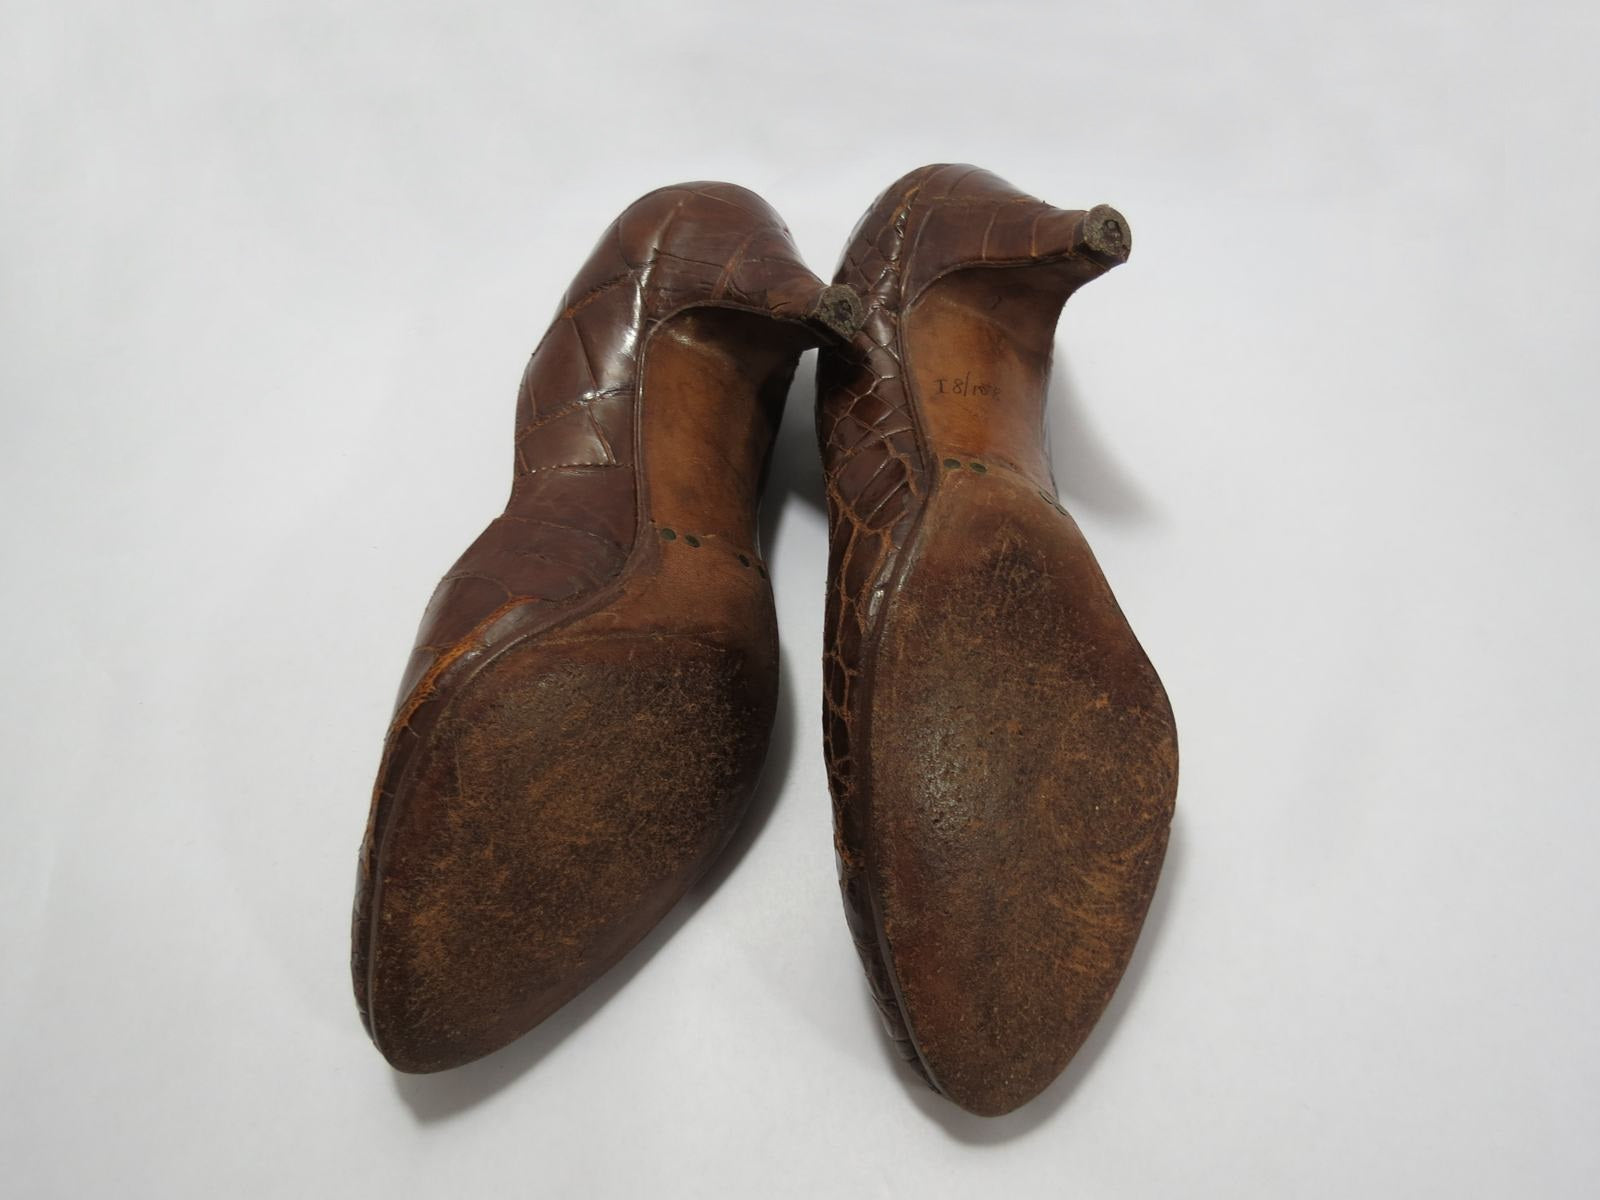 vintage 1940s shoes brown crocodile skin pumps heels AU US 7 EU 37.5